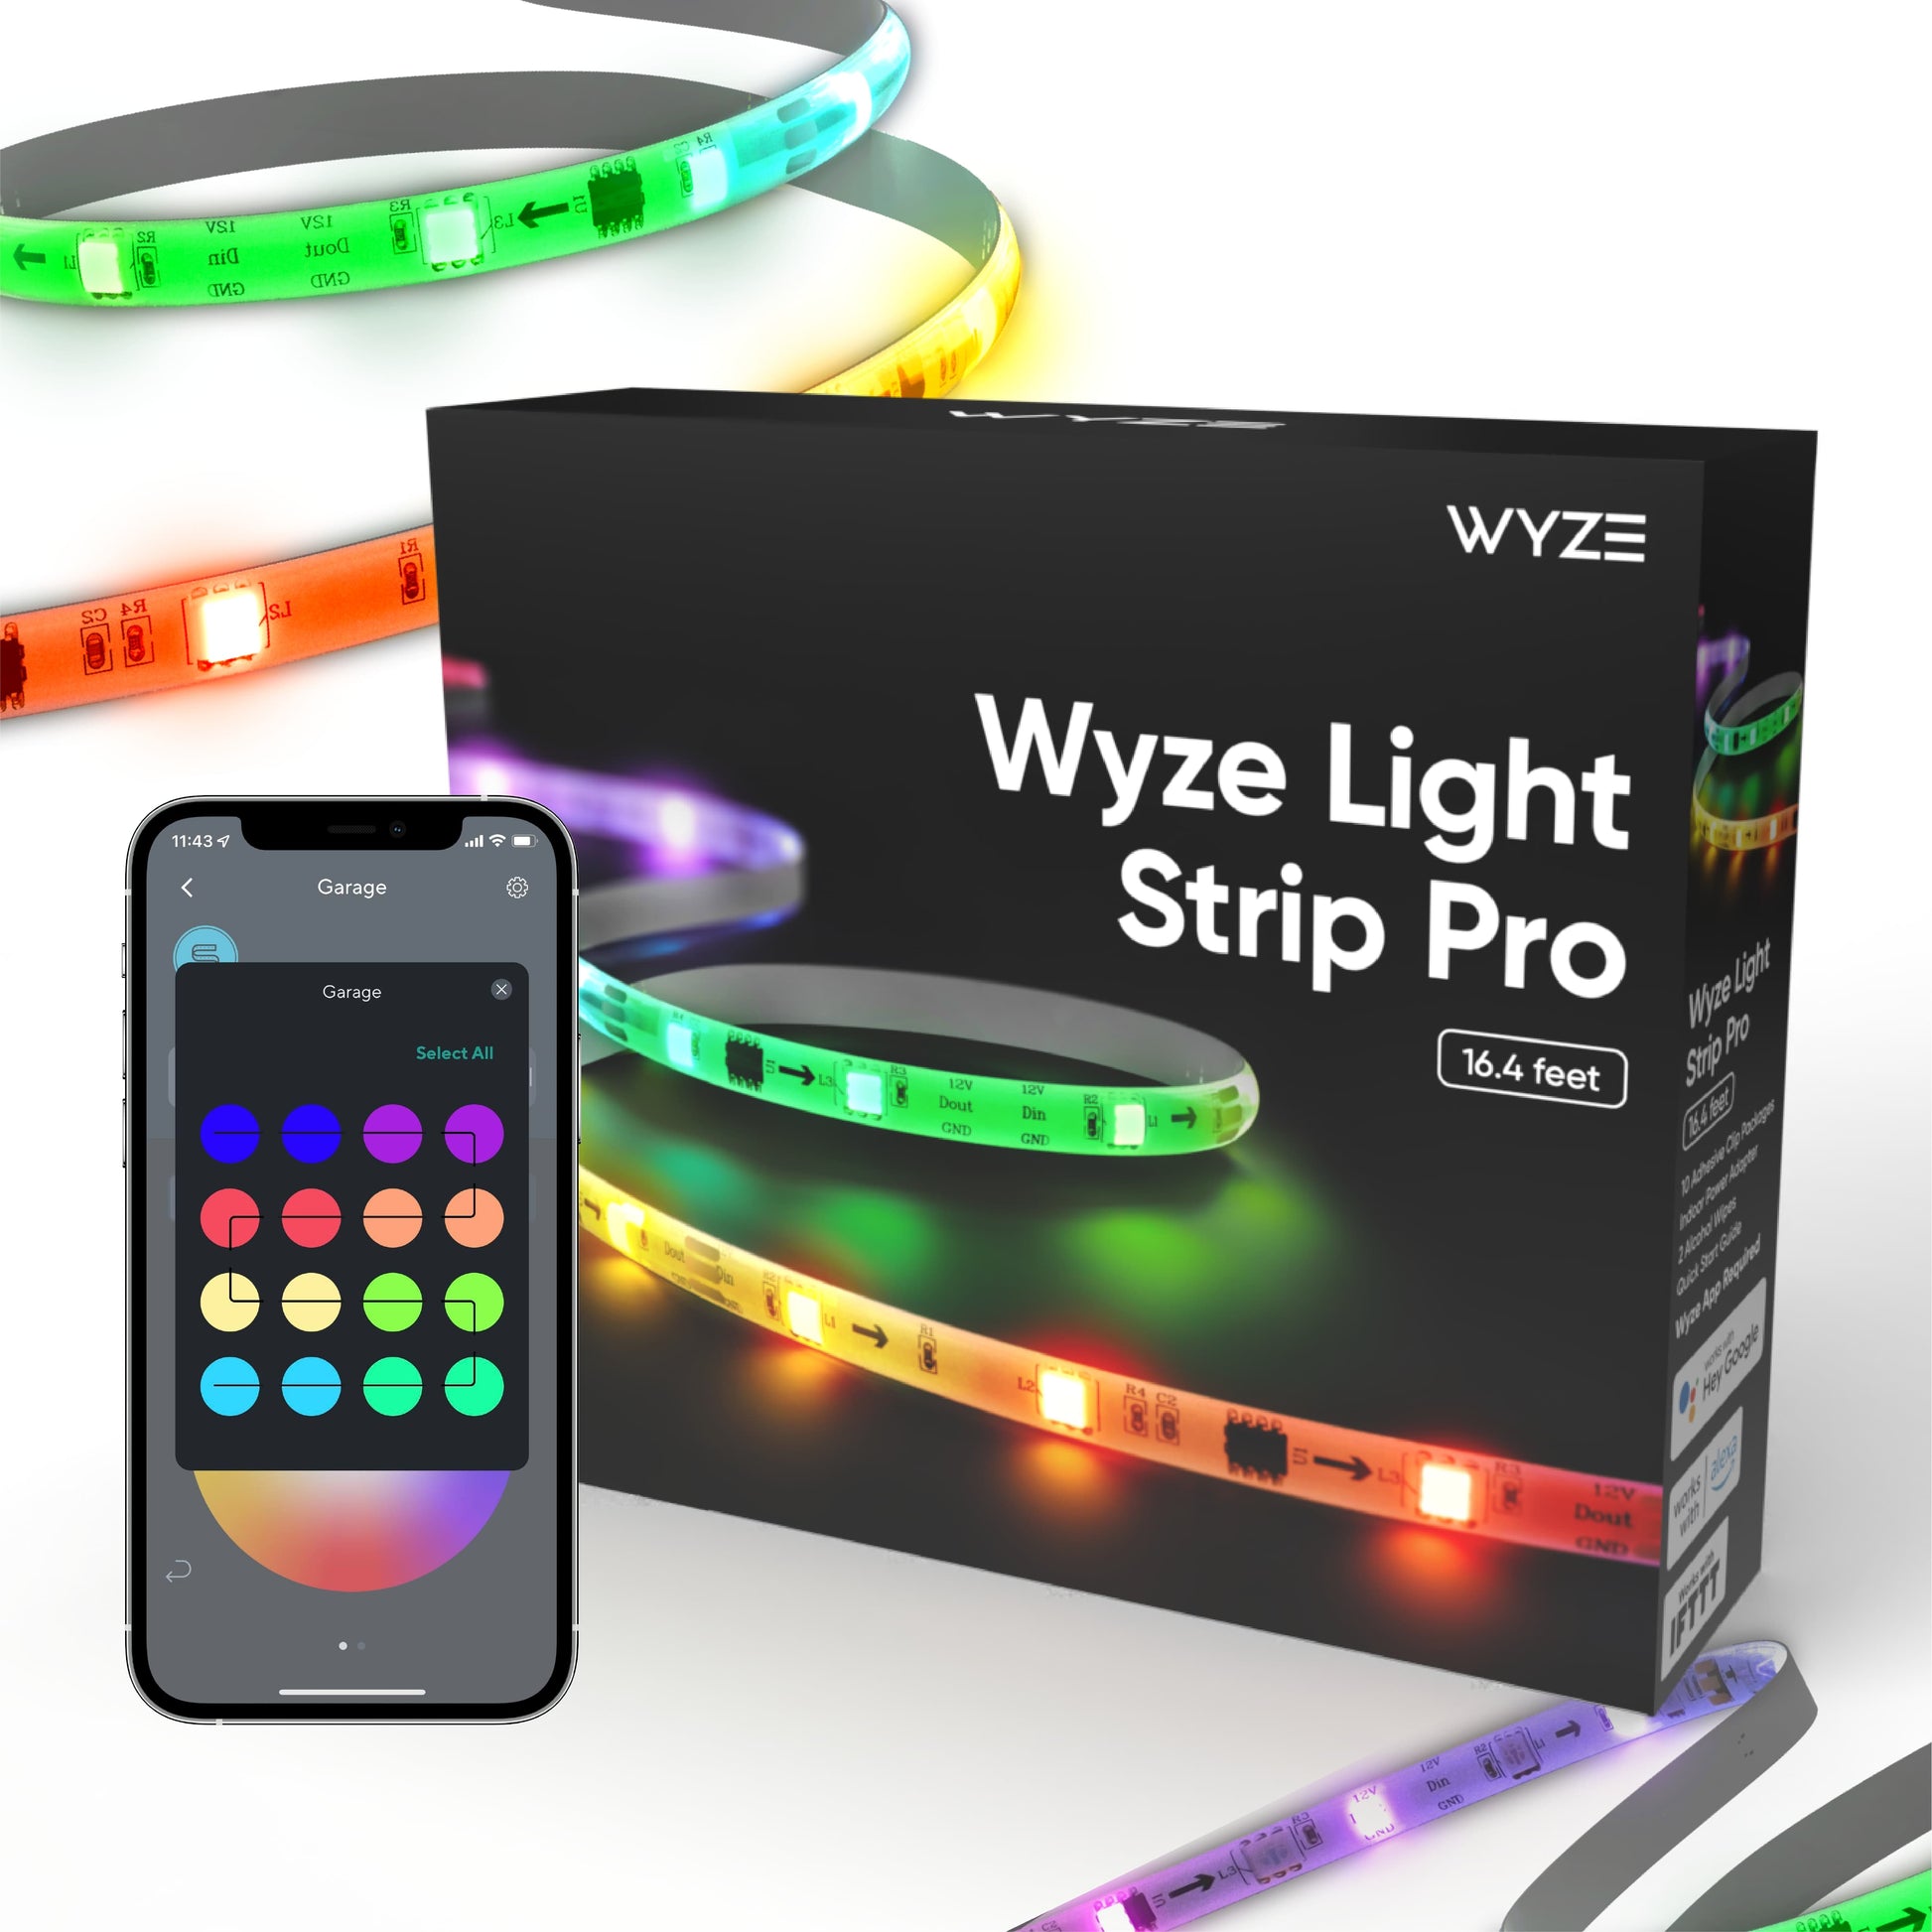 Wyze Light Strip Pro 16.4 ft WiFi LED RGB Lights